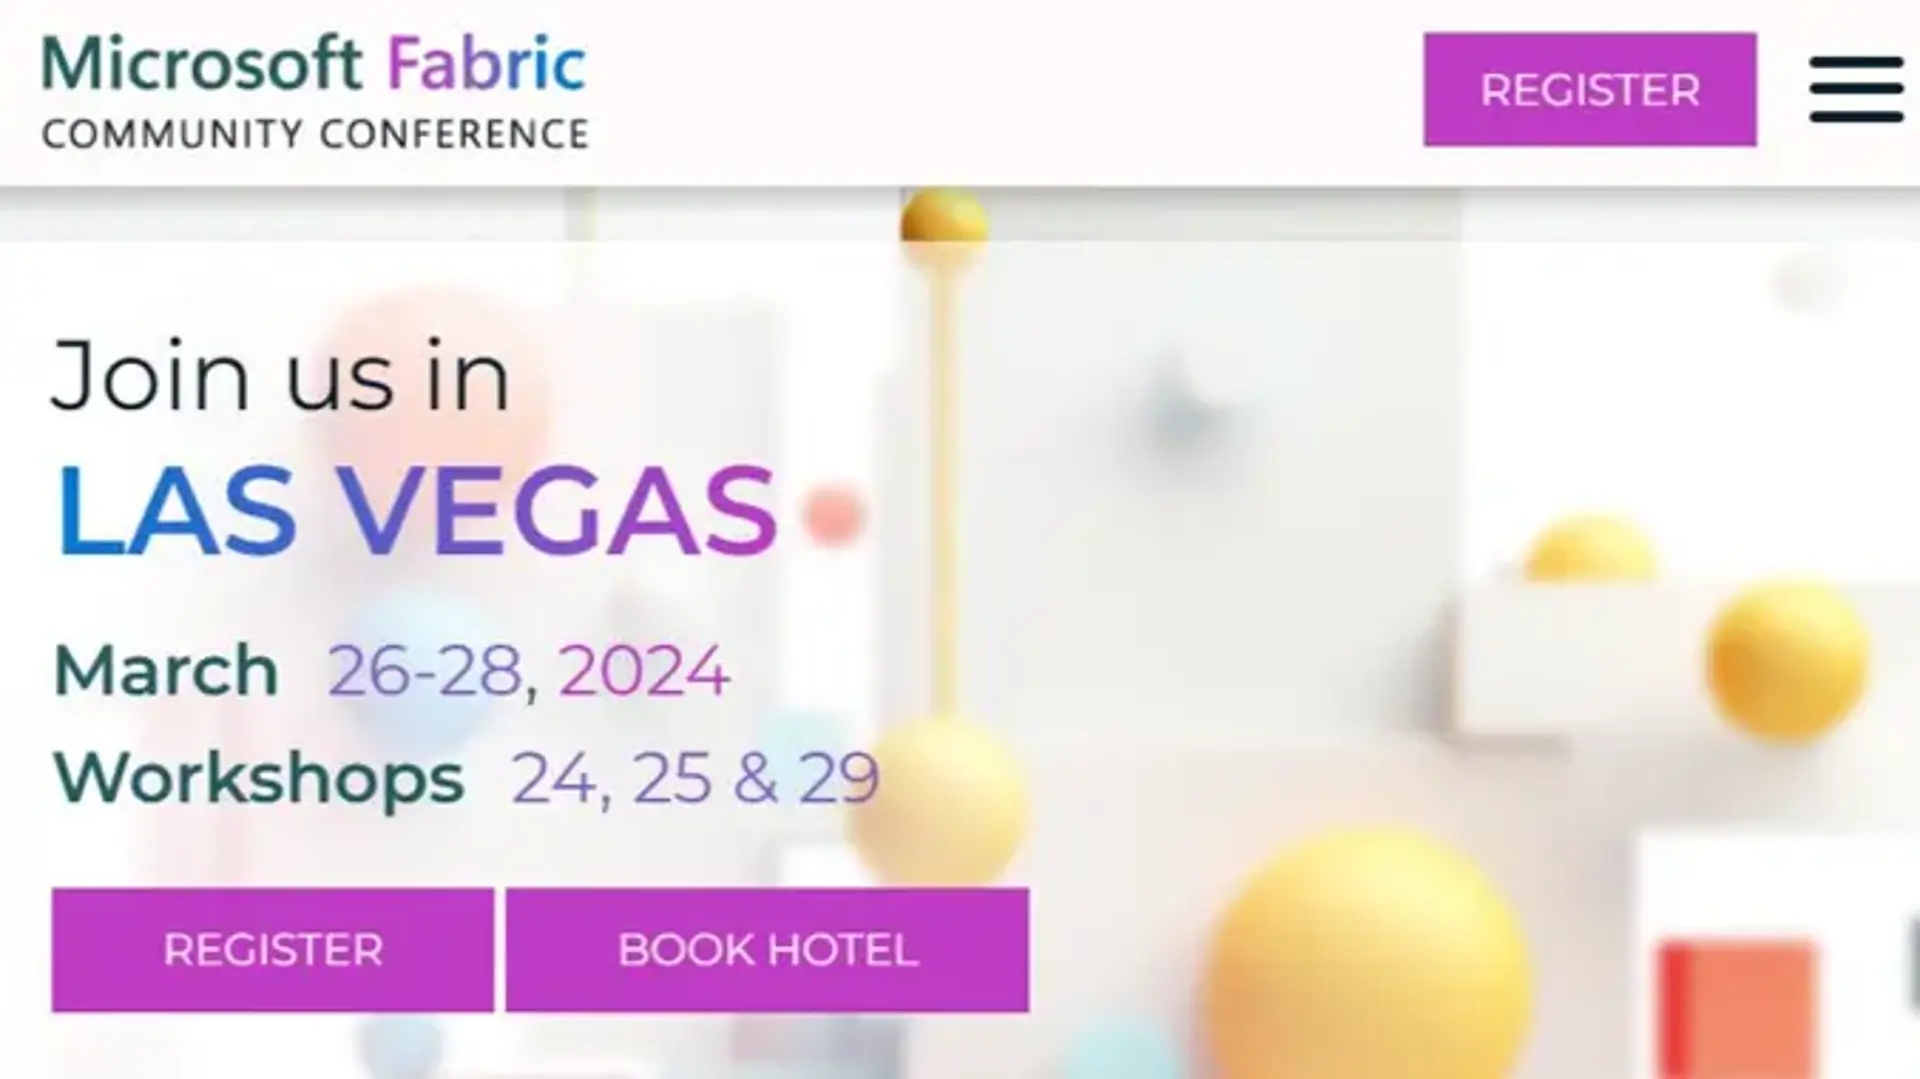 Microsoft Fabric Community Conference - Las Vegas Mar 26-28, 2024 